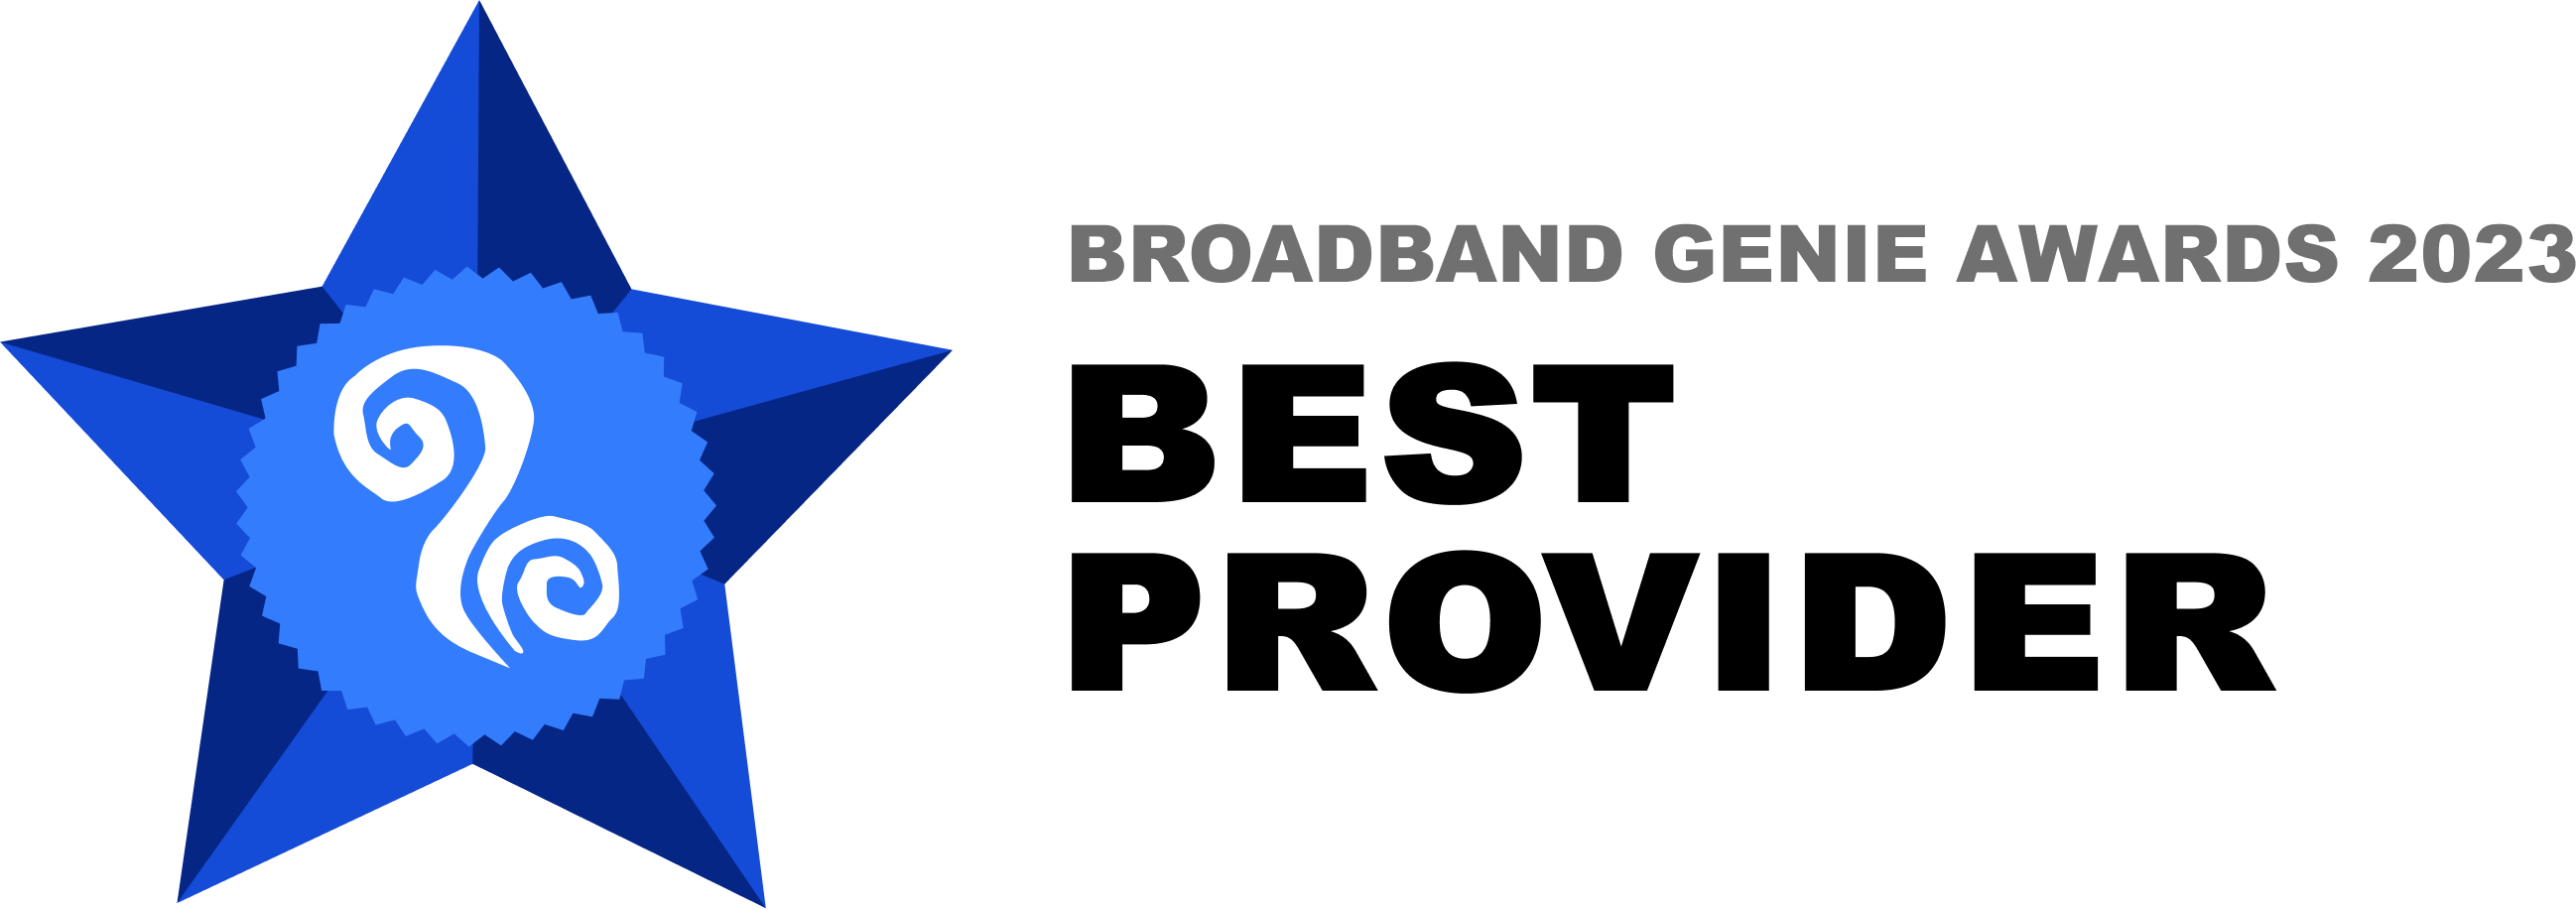 Broadband genie awards 2023, best provider